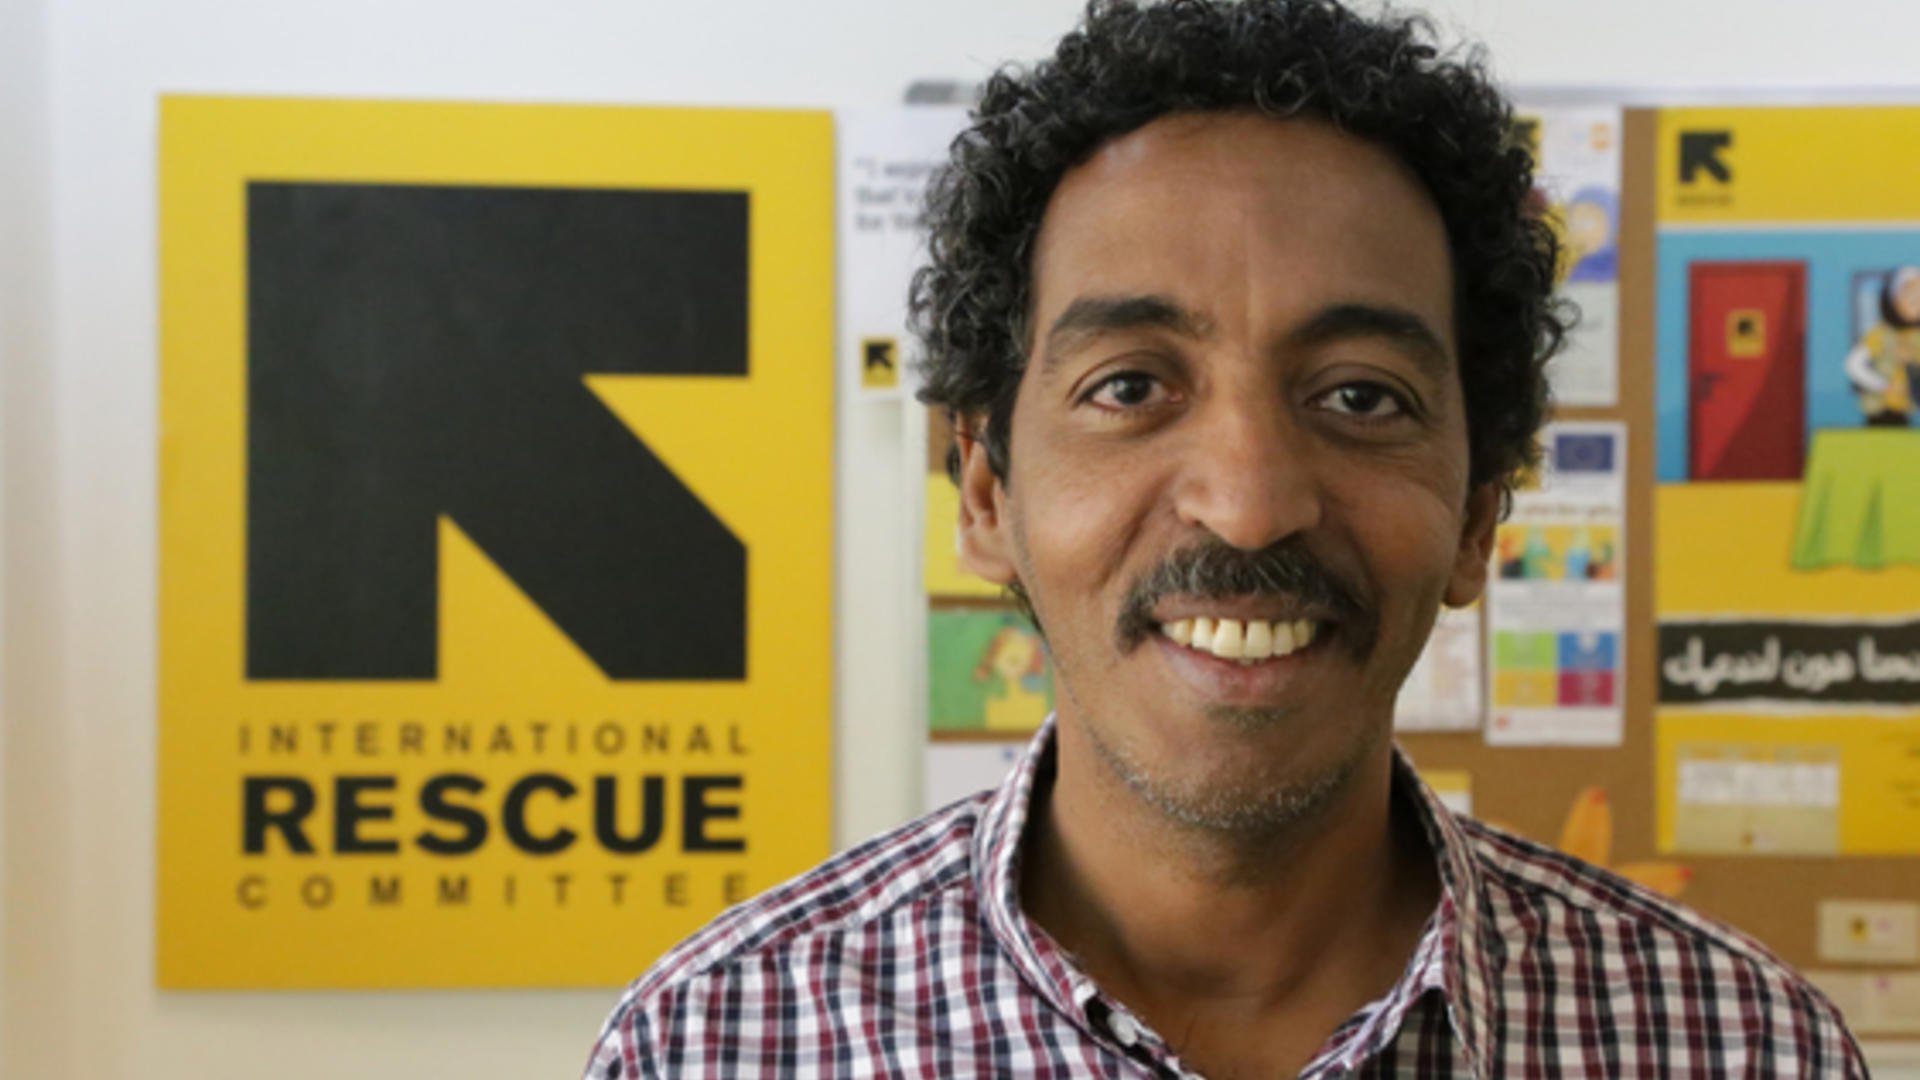 IRC aid worker Mustafa Hassan